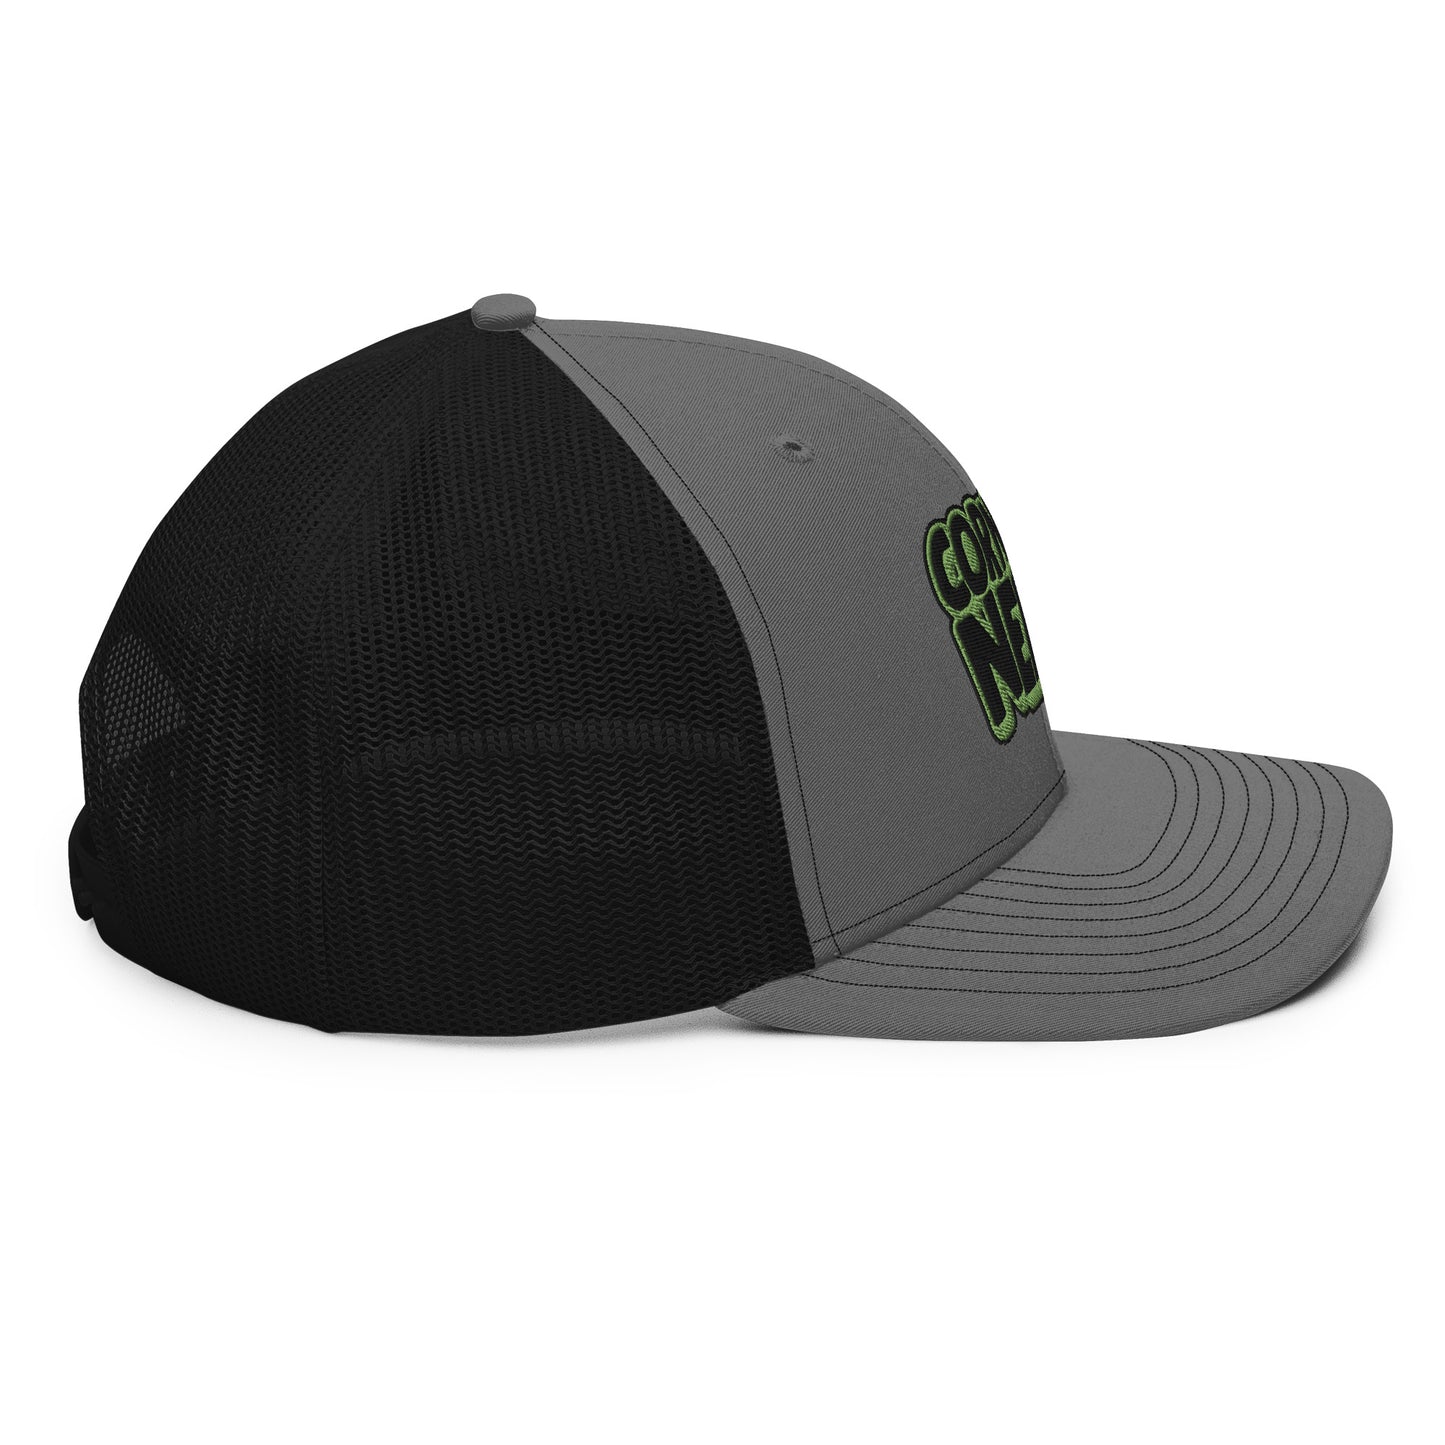 black/kiwi green nerds logo Richardson 112 snapback Trucker hat